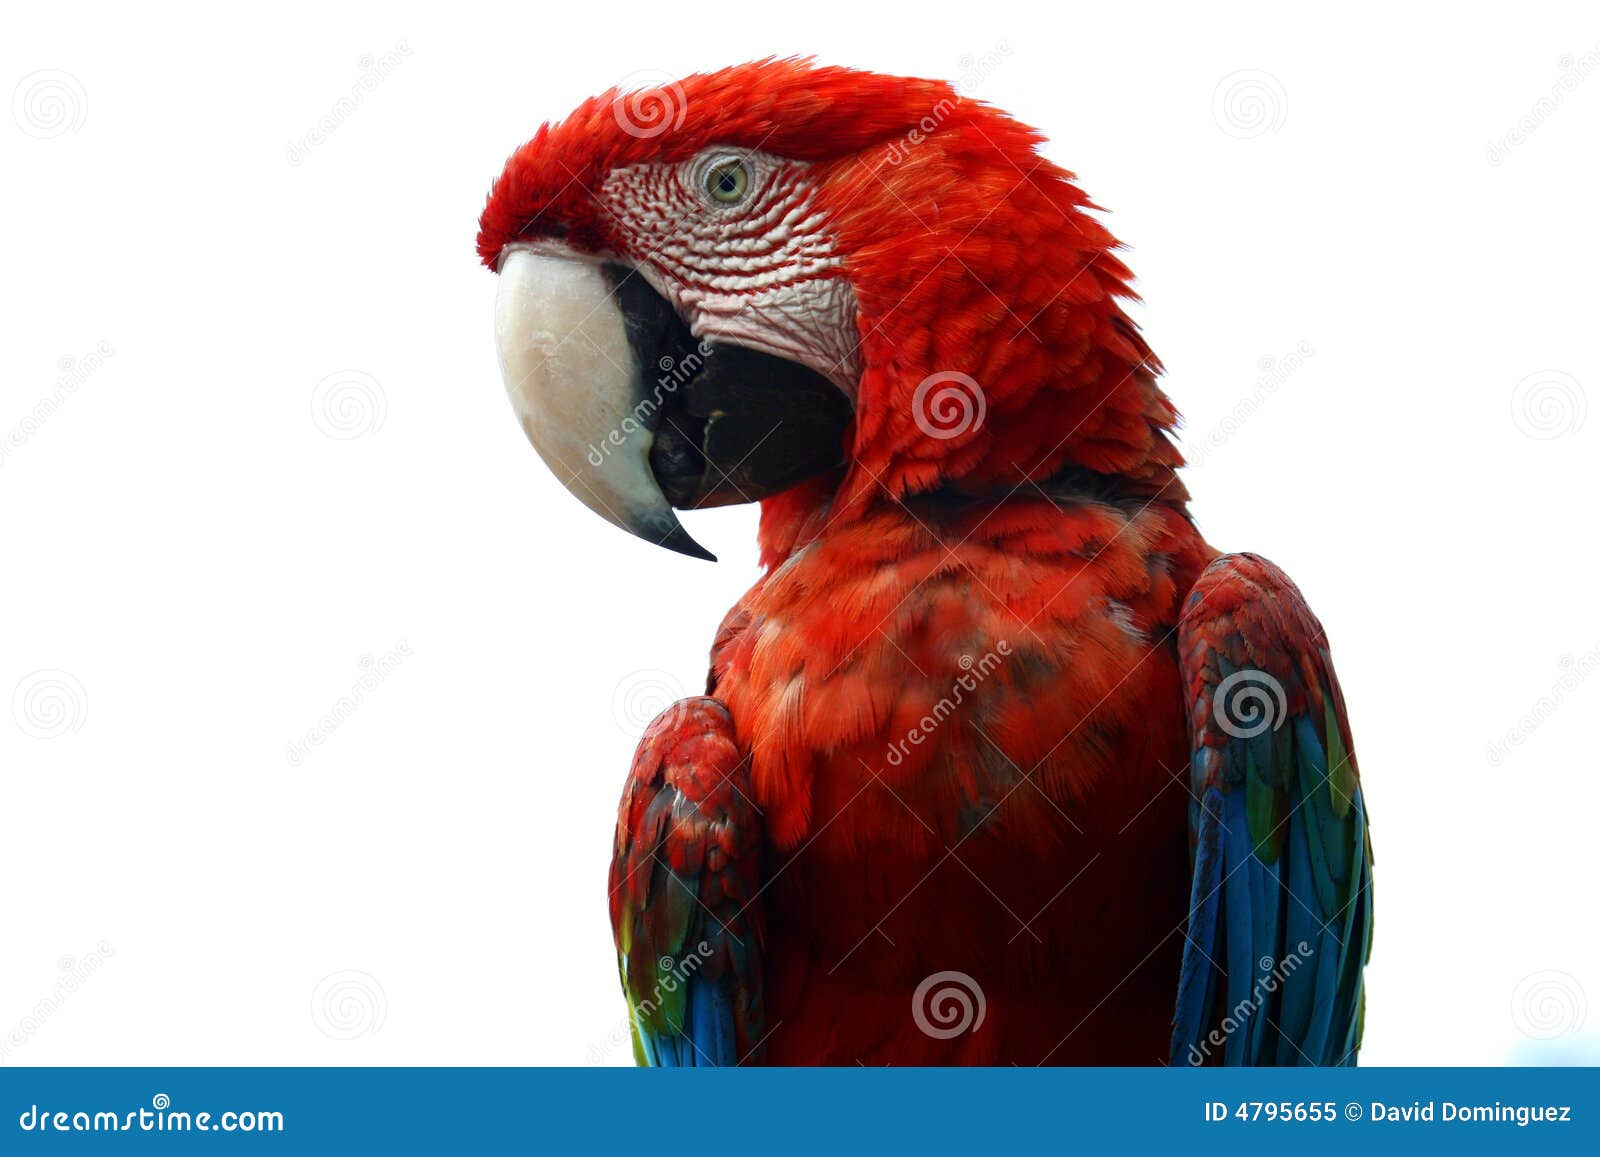 macaw on white background